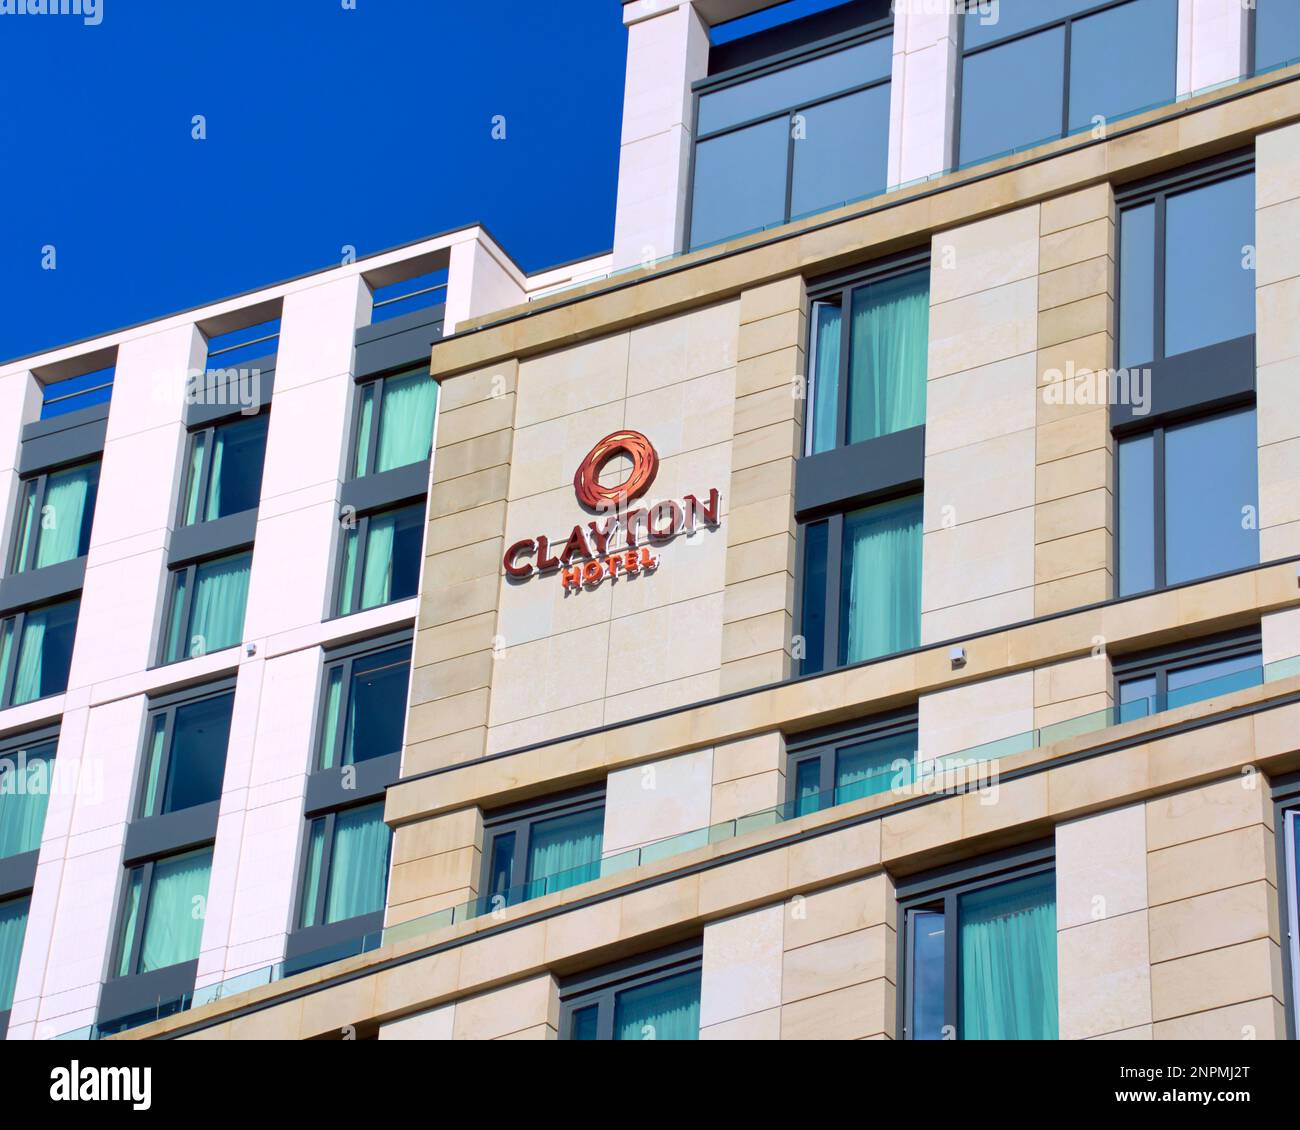 Clayton Hotel Glasgow 286 Clyde St, Glasgow G1 4AR uk Stock Photo